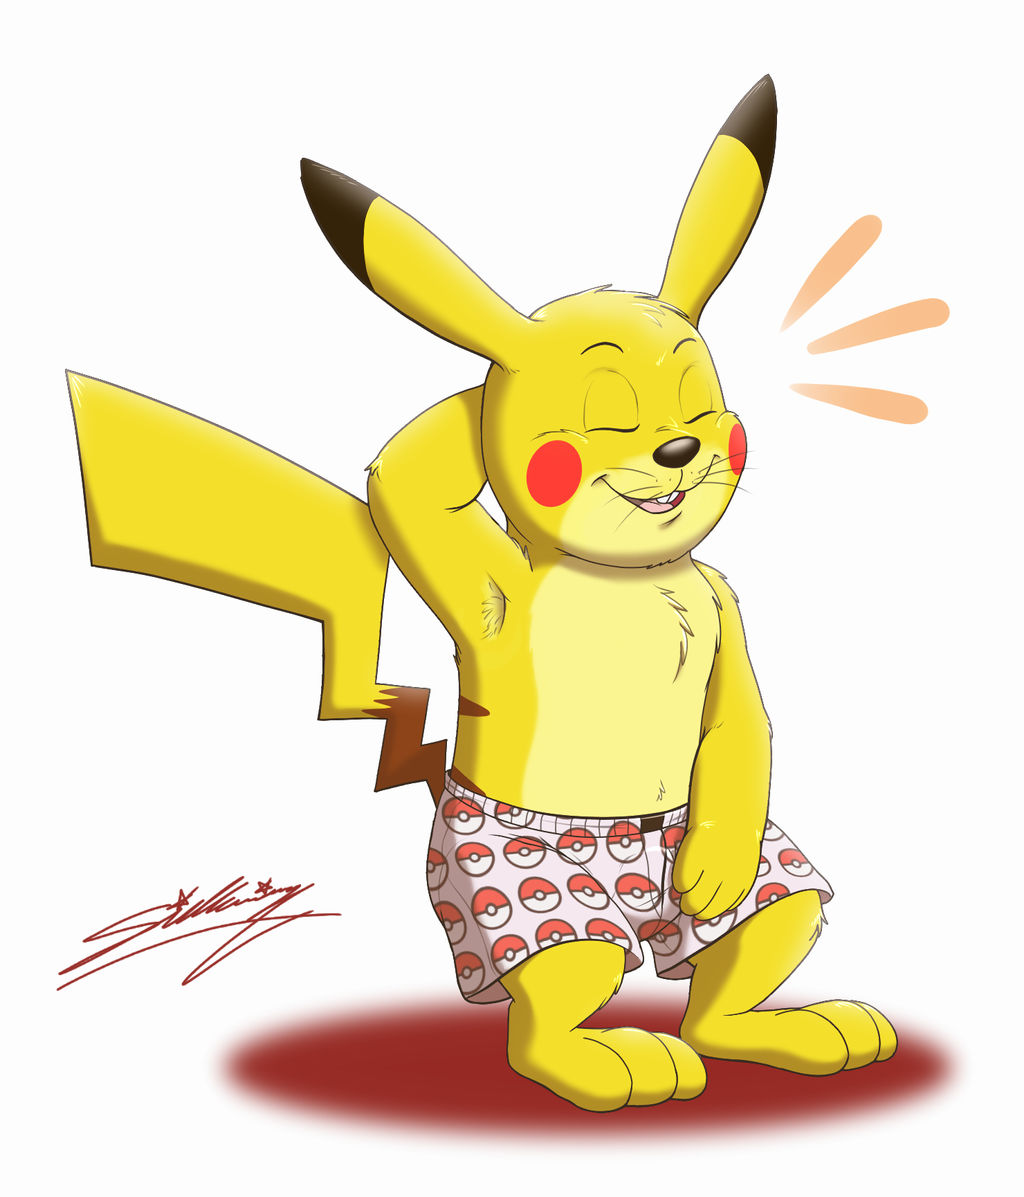 My Pikachu in boxers! by SAGADreams on DeviantArt